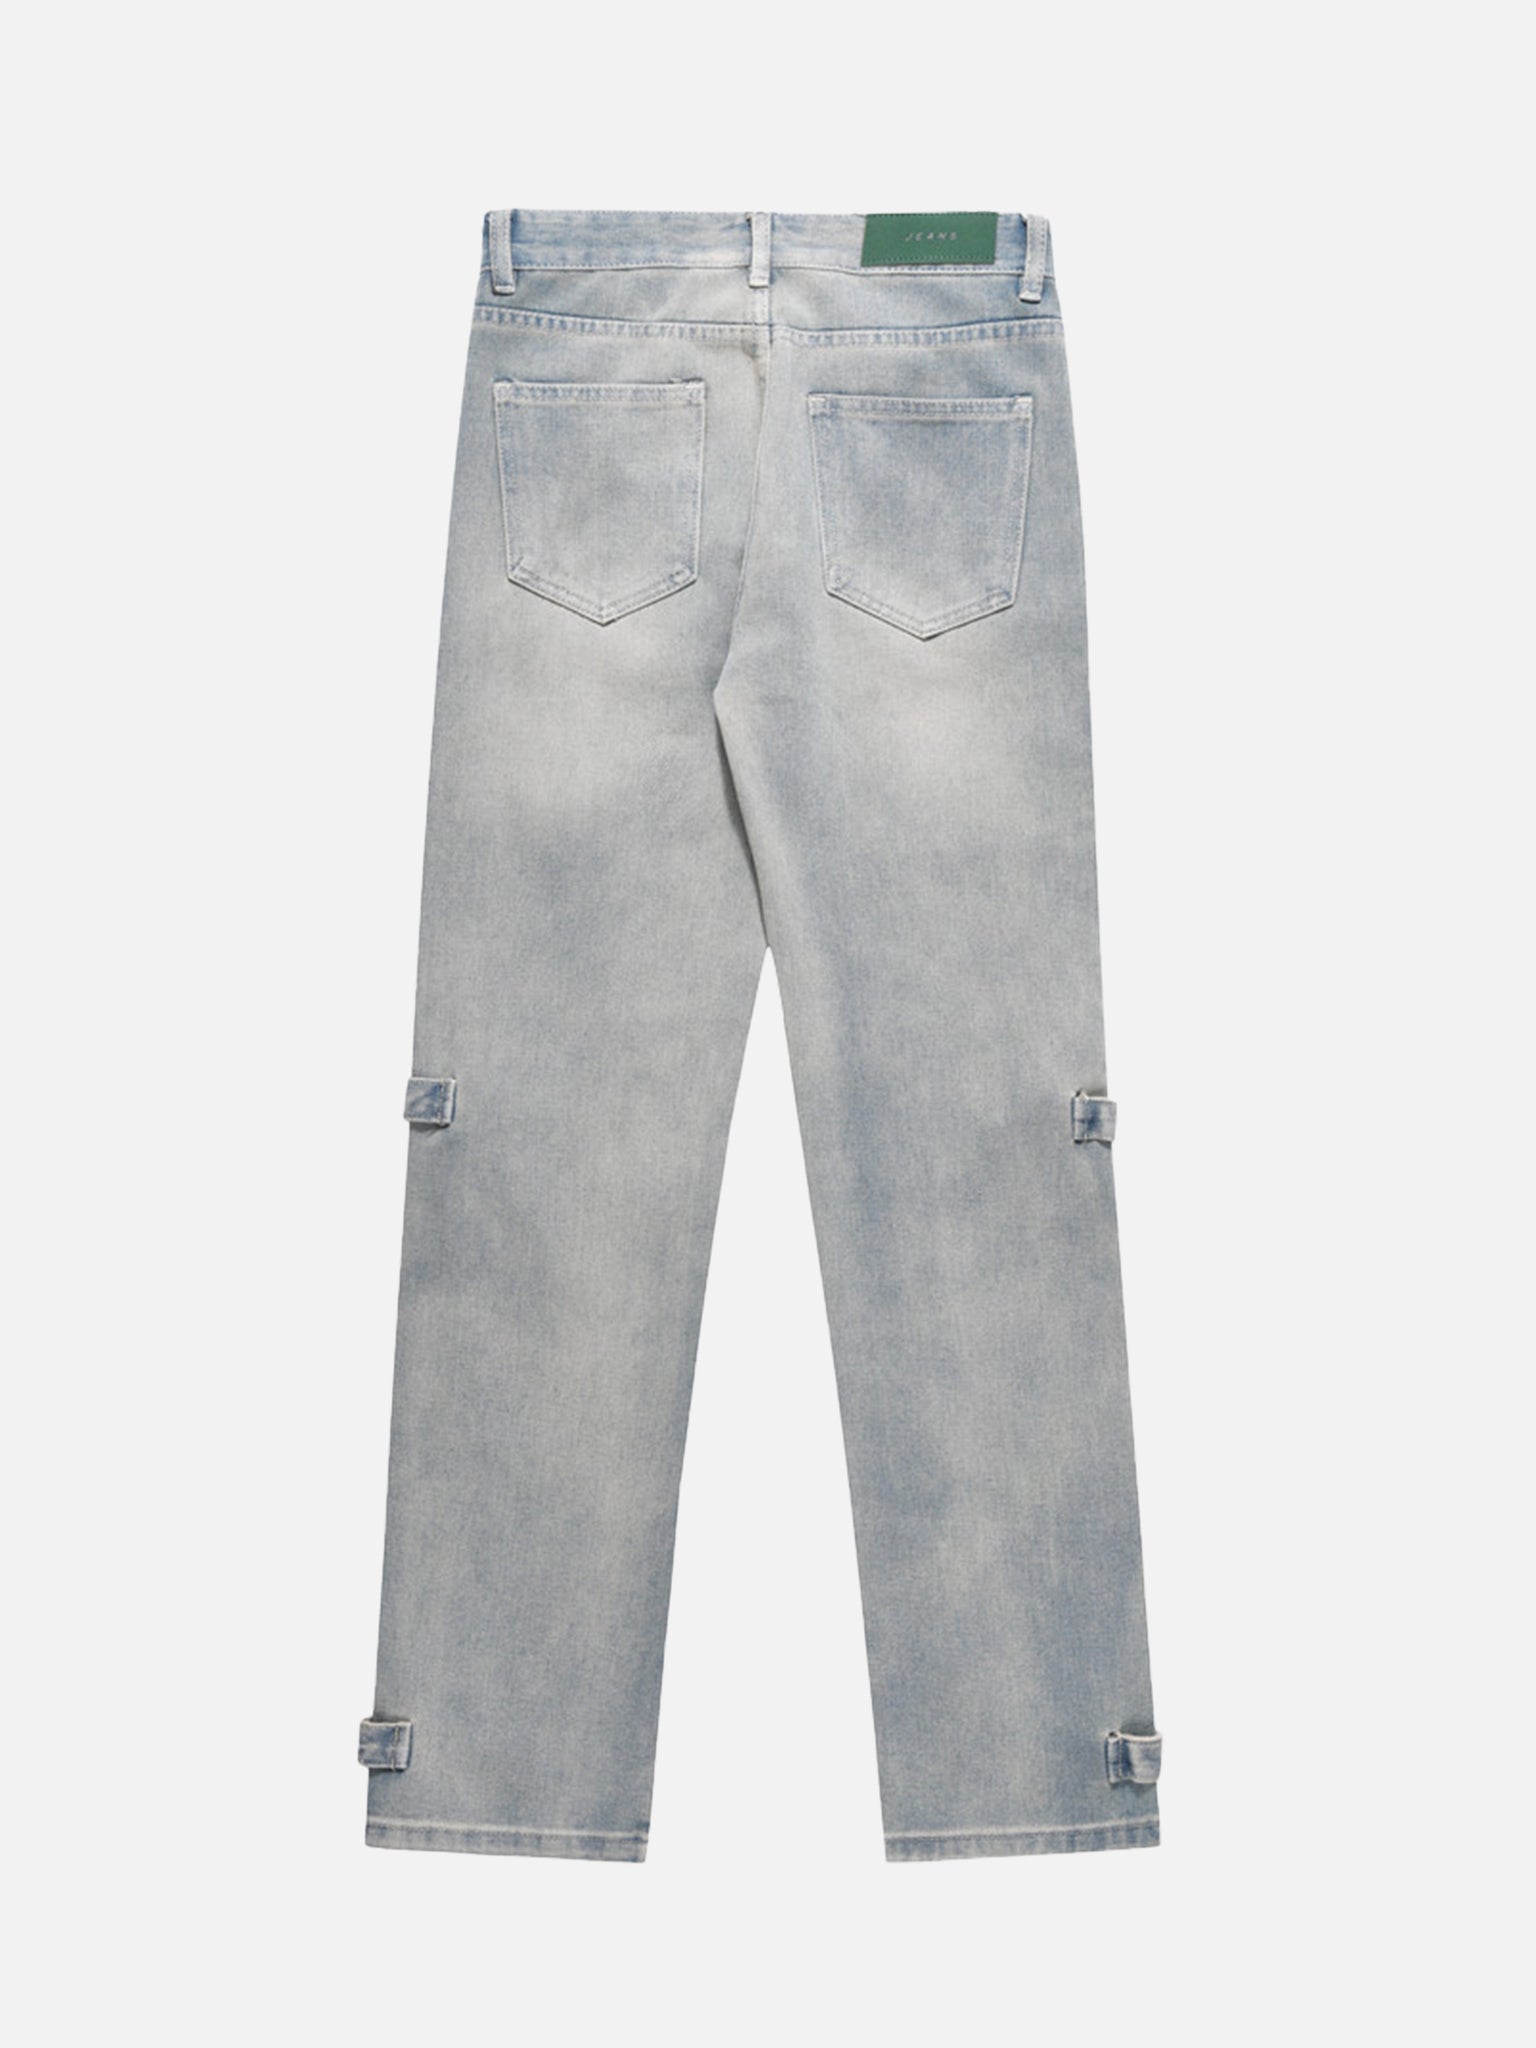 Thesupermade High Street Hip-hop Design Sense Zipper Straight Jeans Nine-point Pants